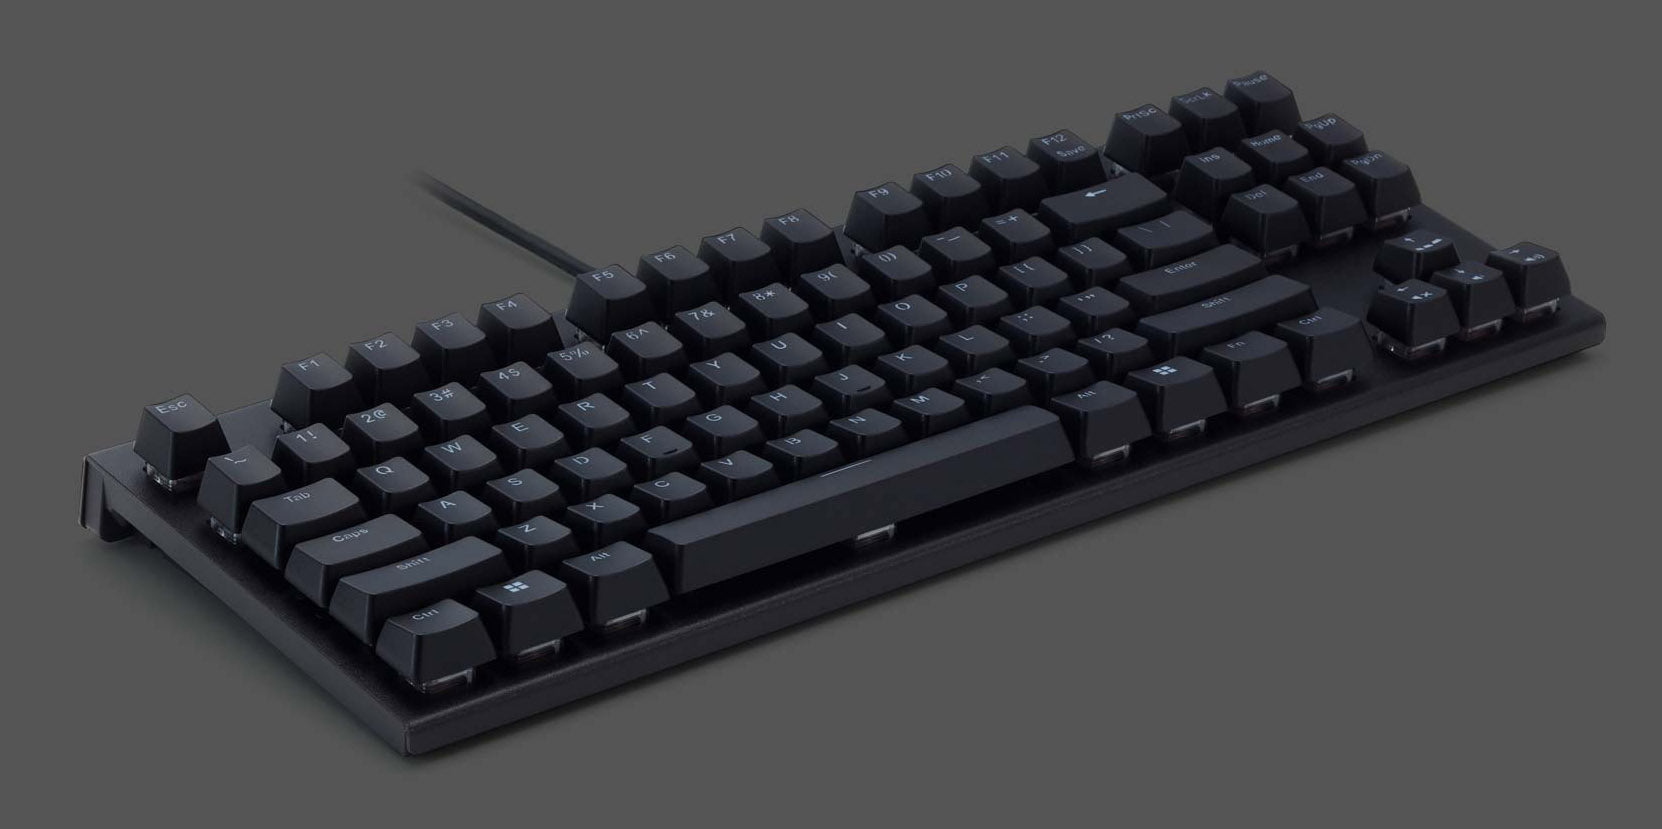 Realforce GX1 Black TKL RGB Mechanical Keyboard MKUUOMOJ38 |59587|